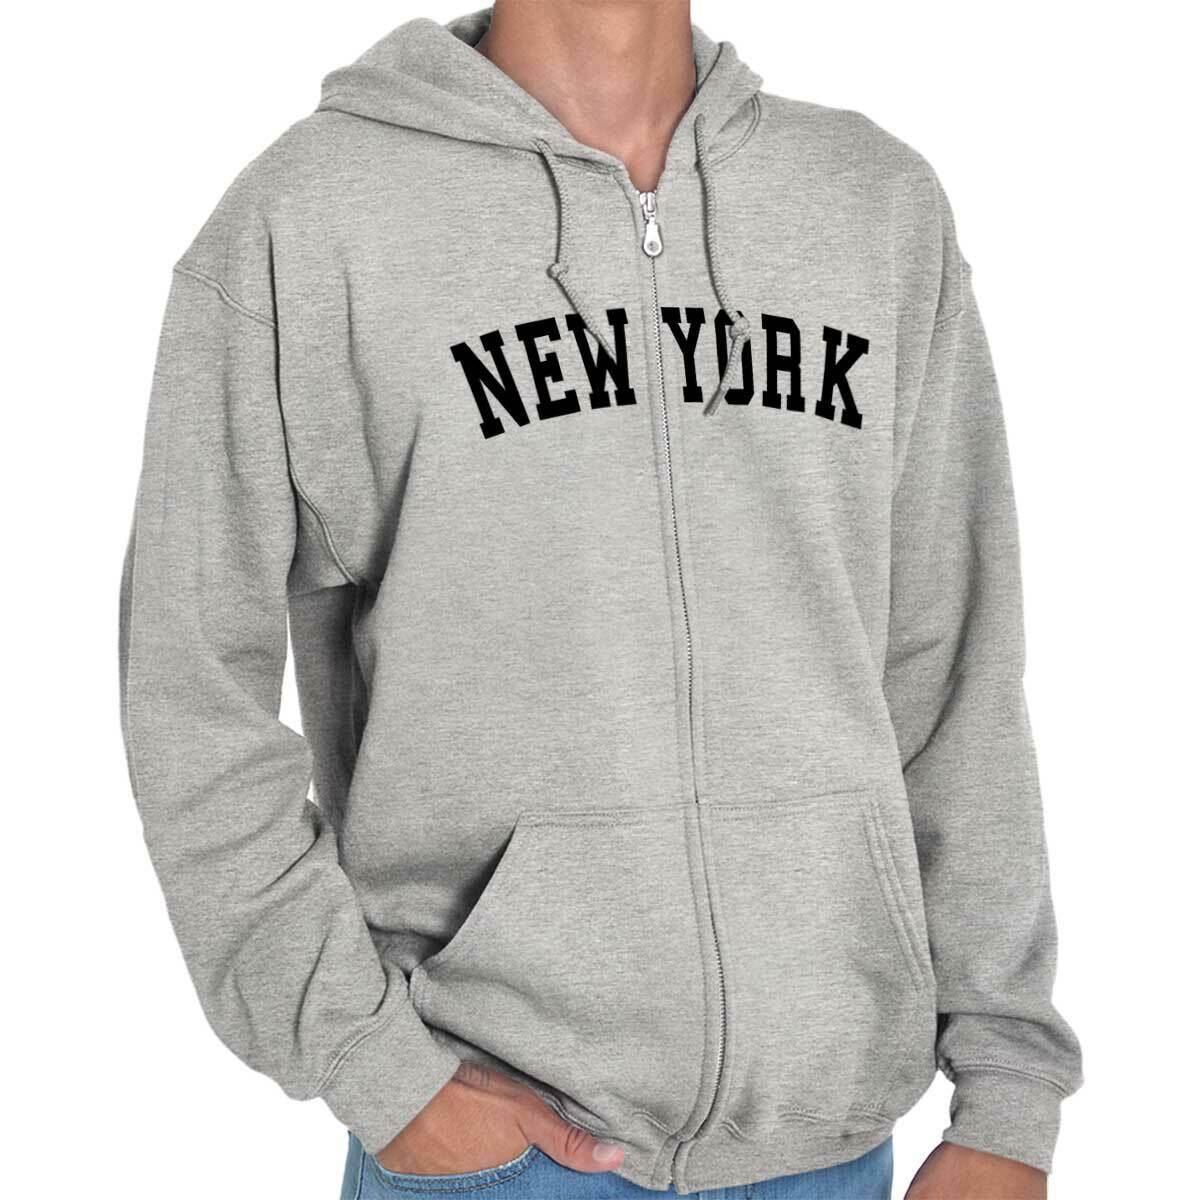 New York Athletic Student Gym Vacation NY Sweatshirt Zip Up Hoodie Men Women